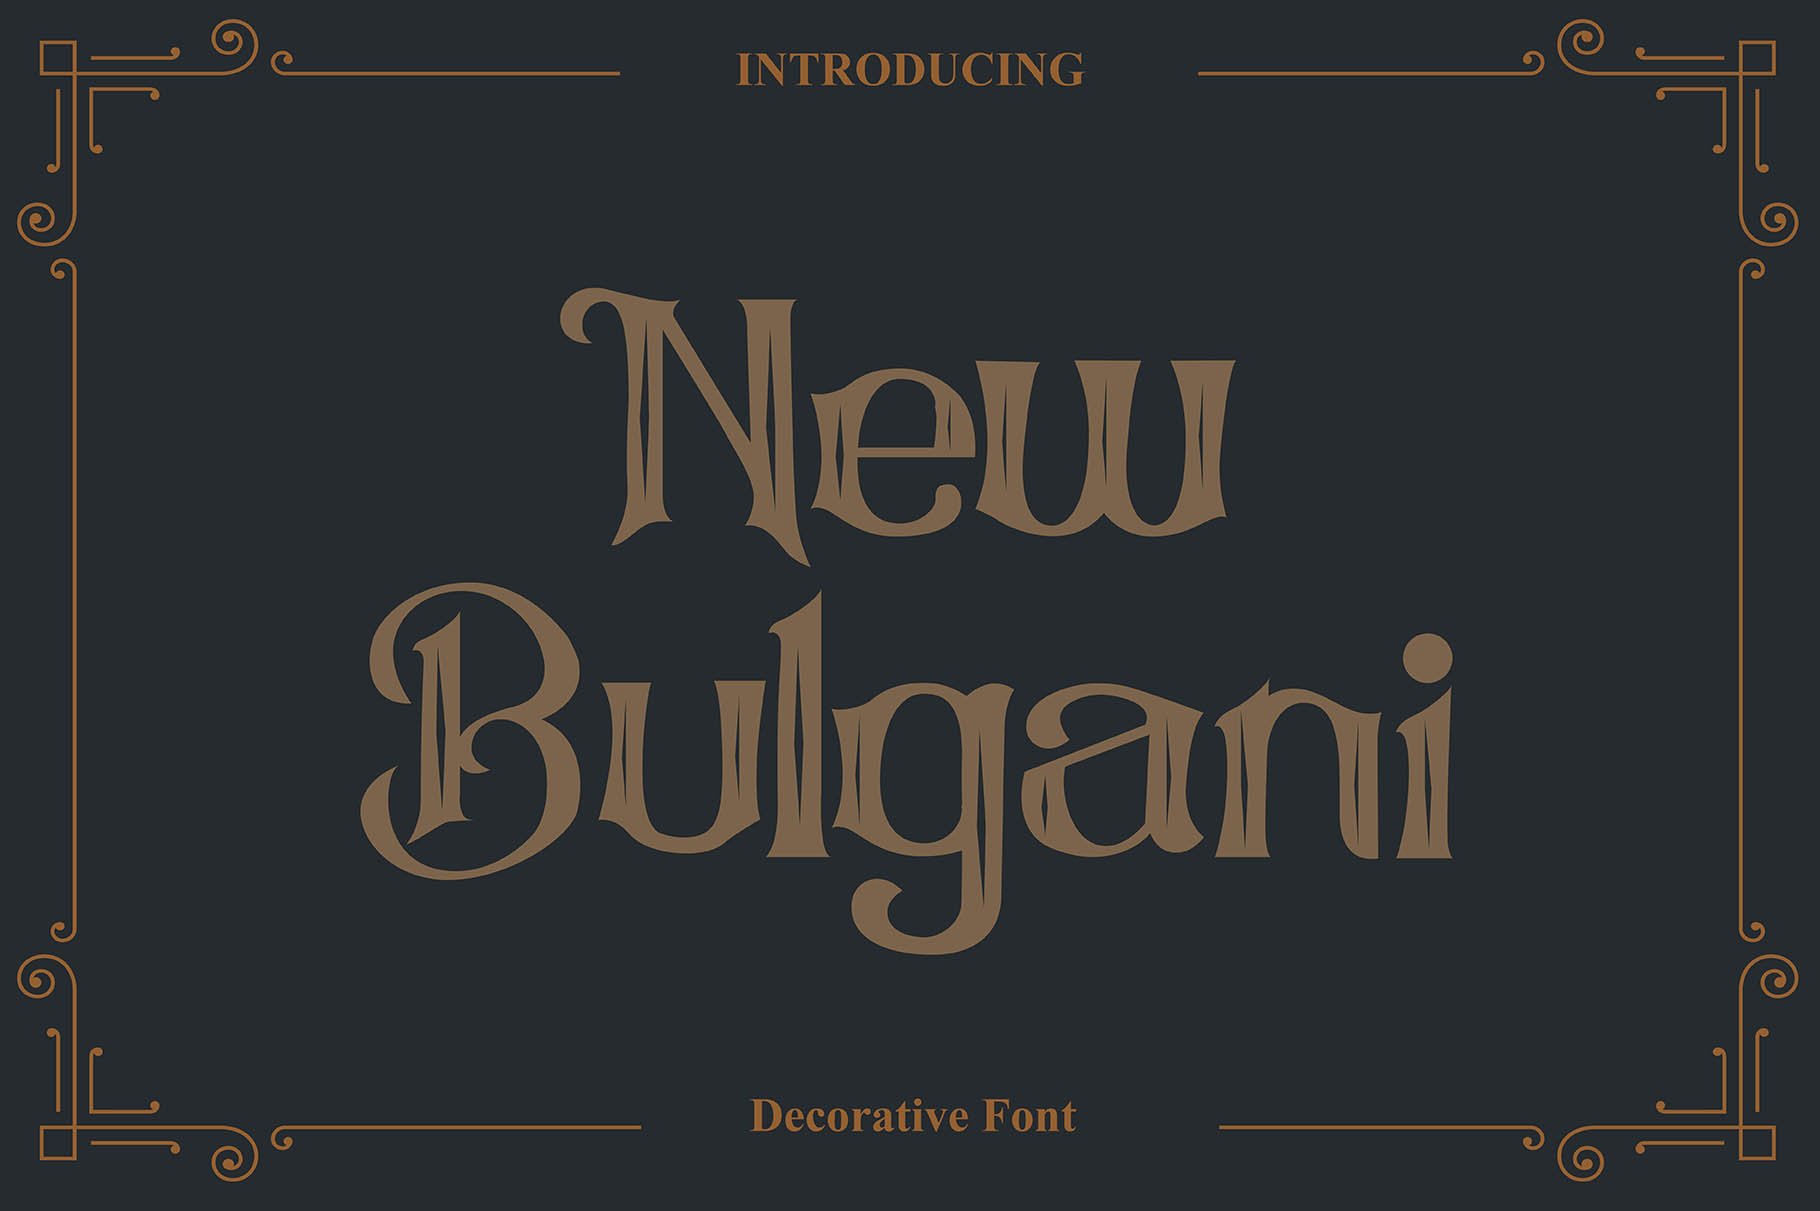 New Bulgani cover image.